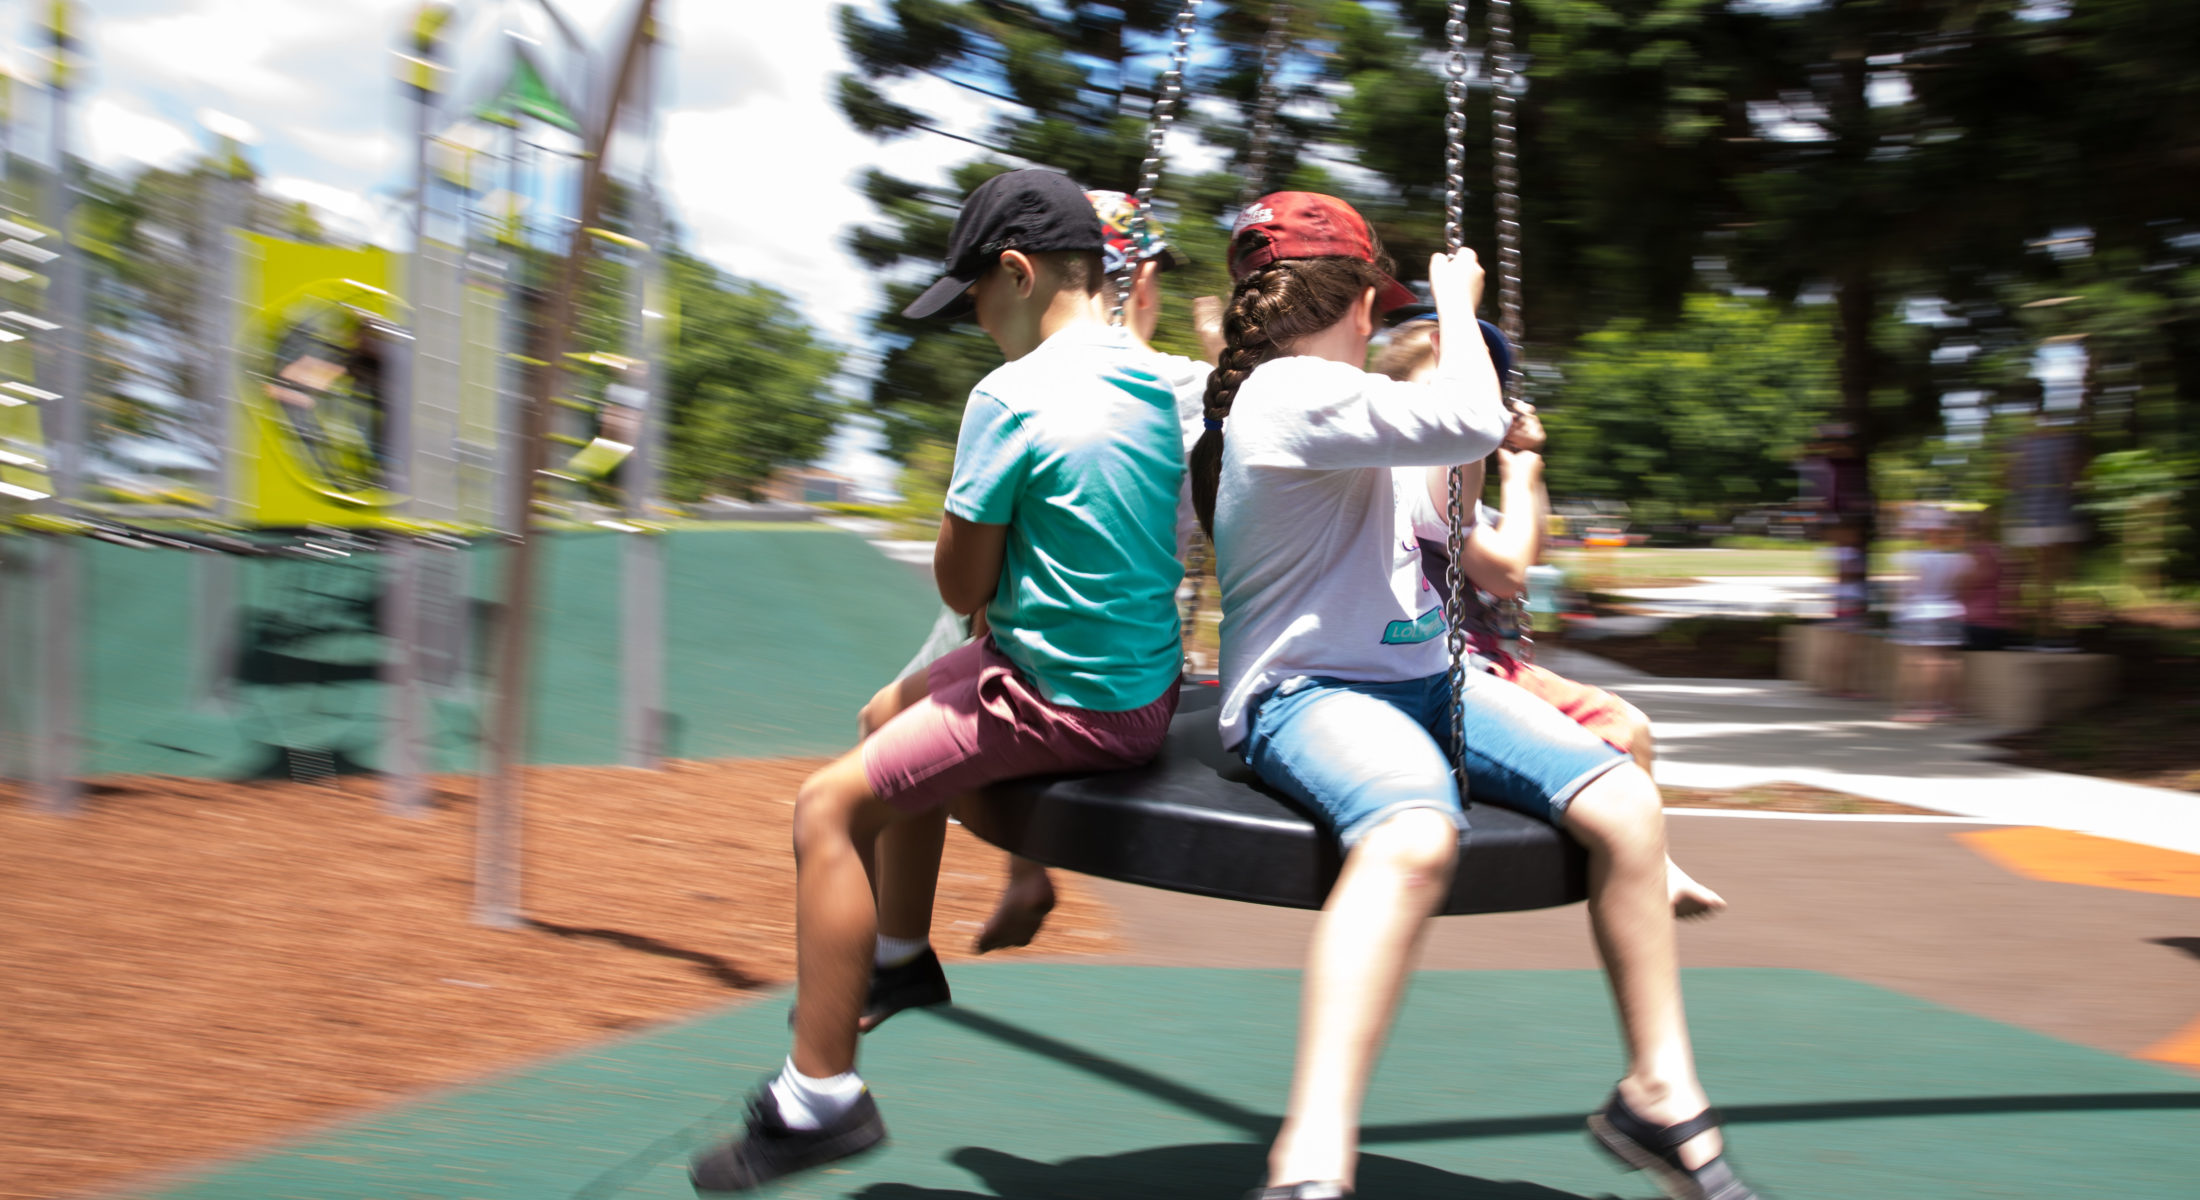 Kids Playing On Playground Pine Rivers Park Strathpine In Moreton Bay Region 21